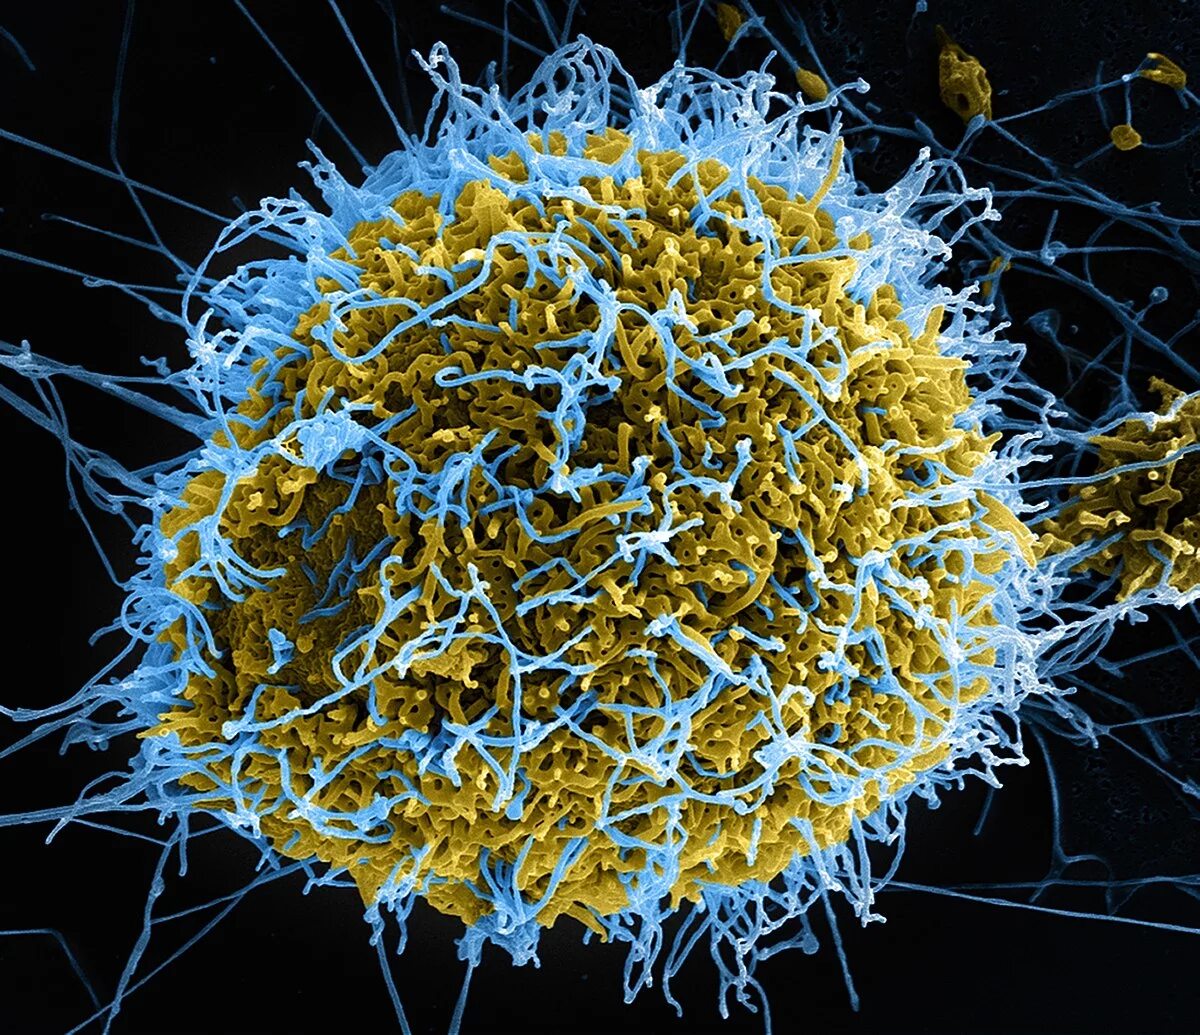 Www virus. Вирусы под микроскопом. Бактериофаг микрофотография. HCOV-229e вирус под микроскопом. Вирус с105.